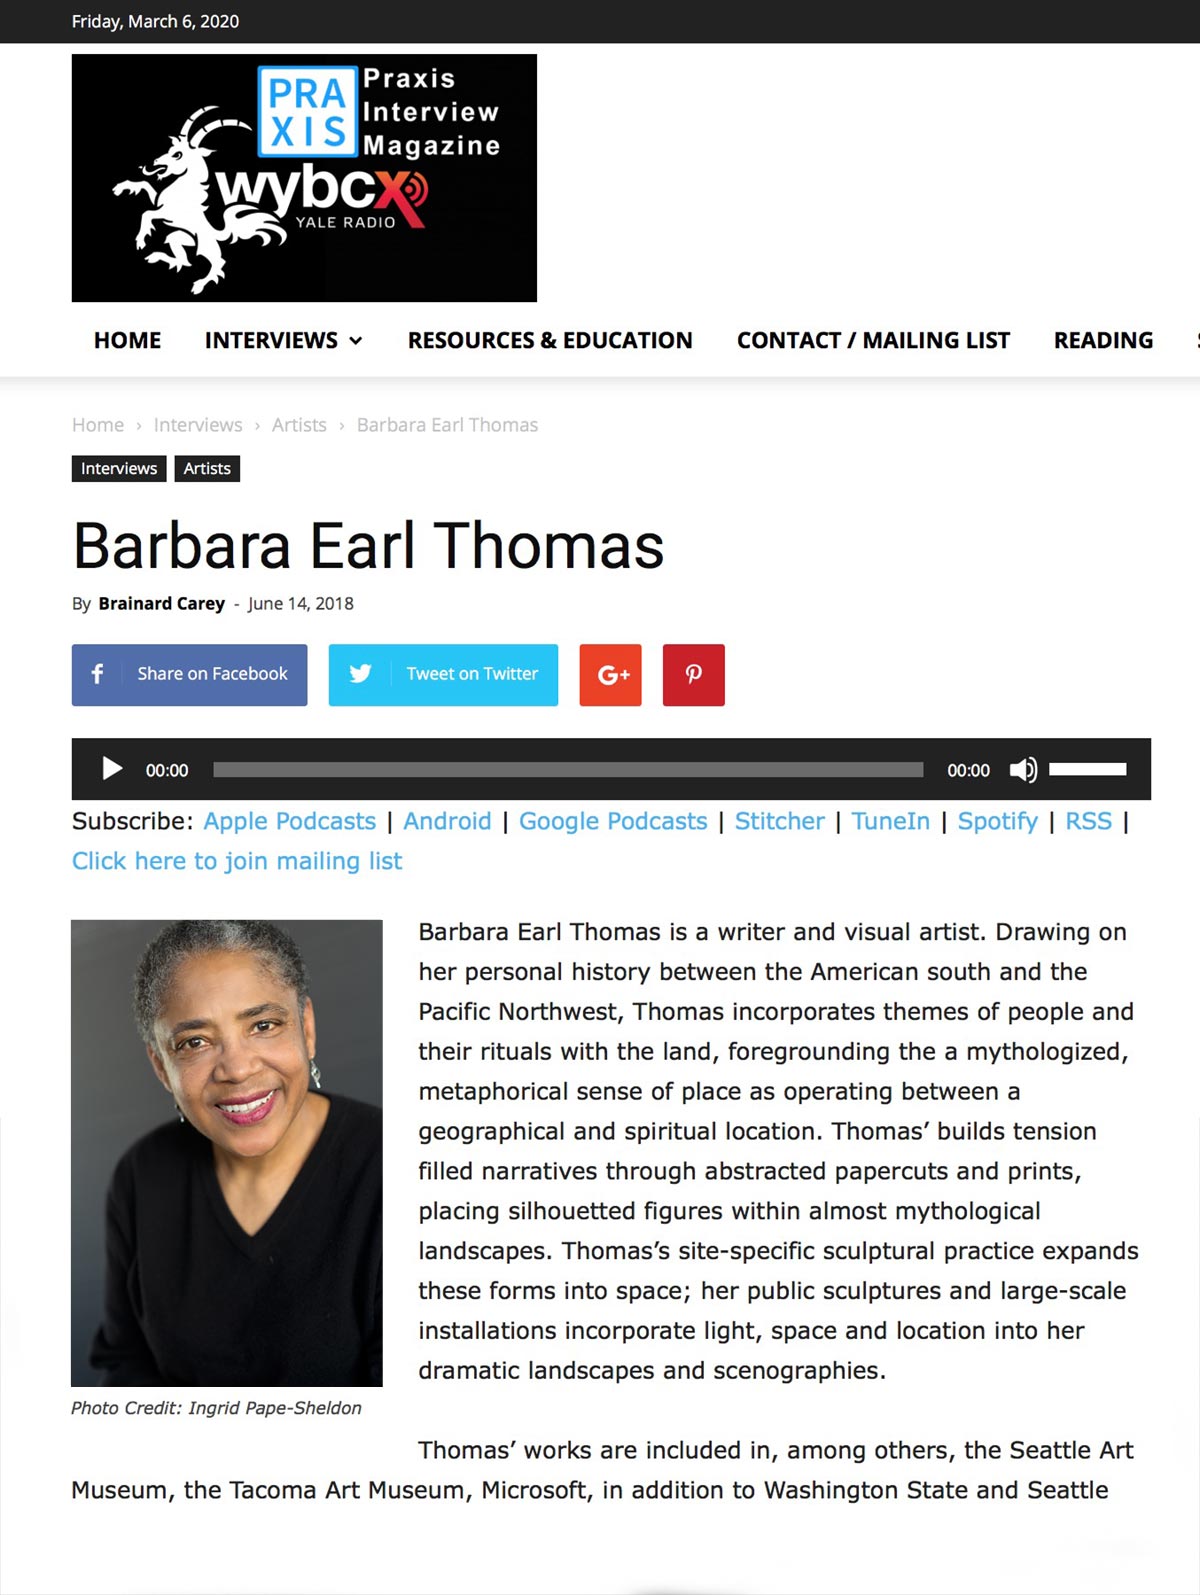 Praxis Interview Magazine - Barbara Earl Thomas, artist